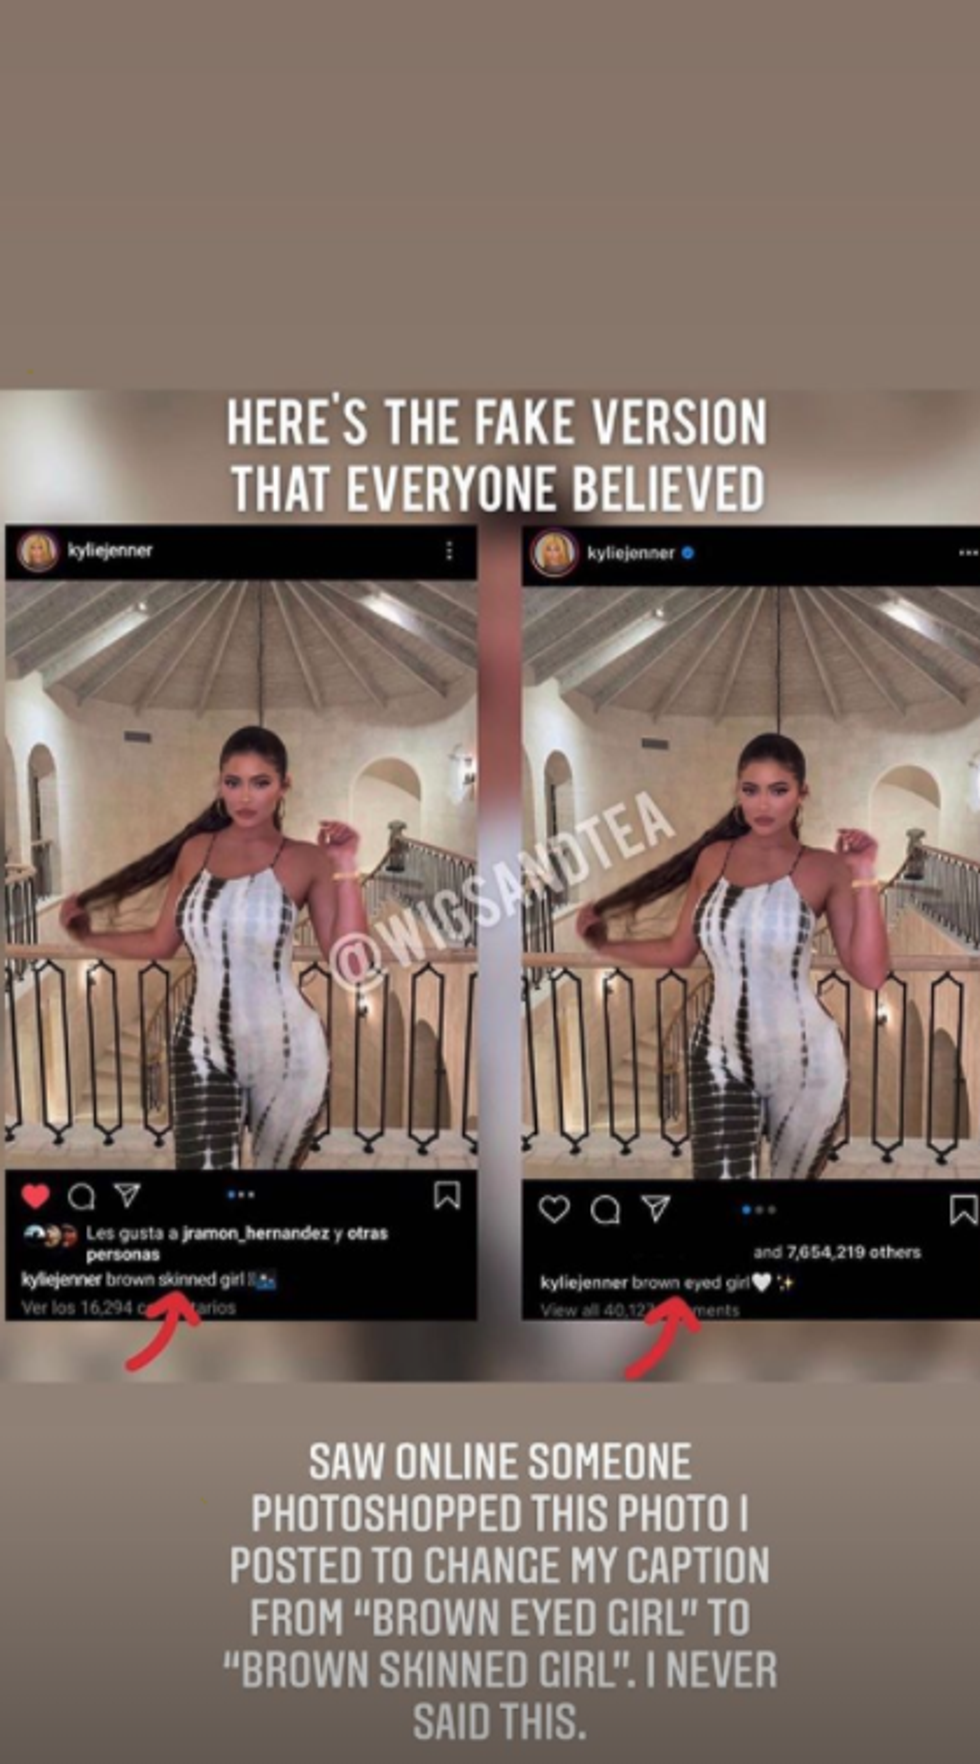 Kylie Jenner Denies Calling Herself Brown Skinned Girl On Instagram Indy100 Indy100 